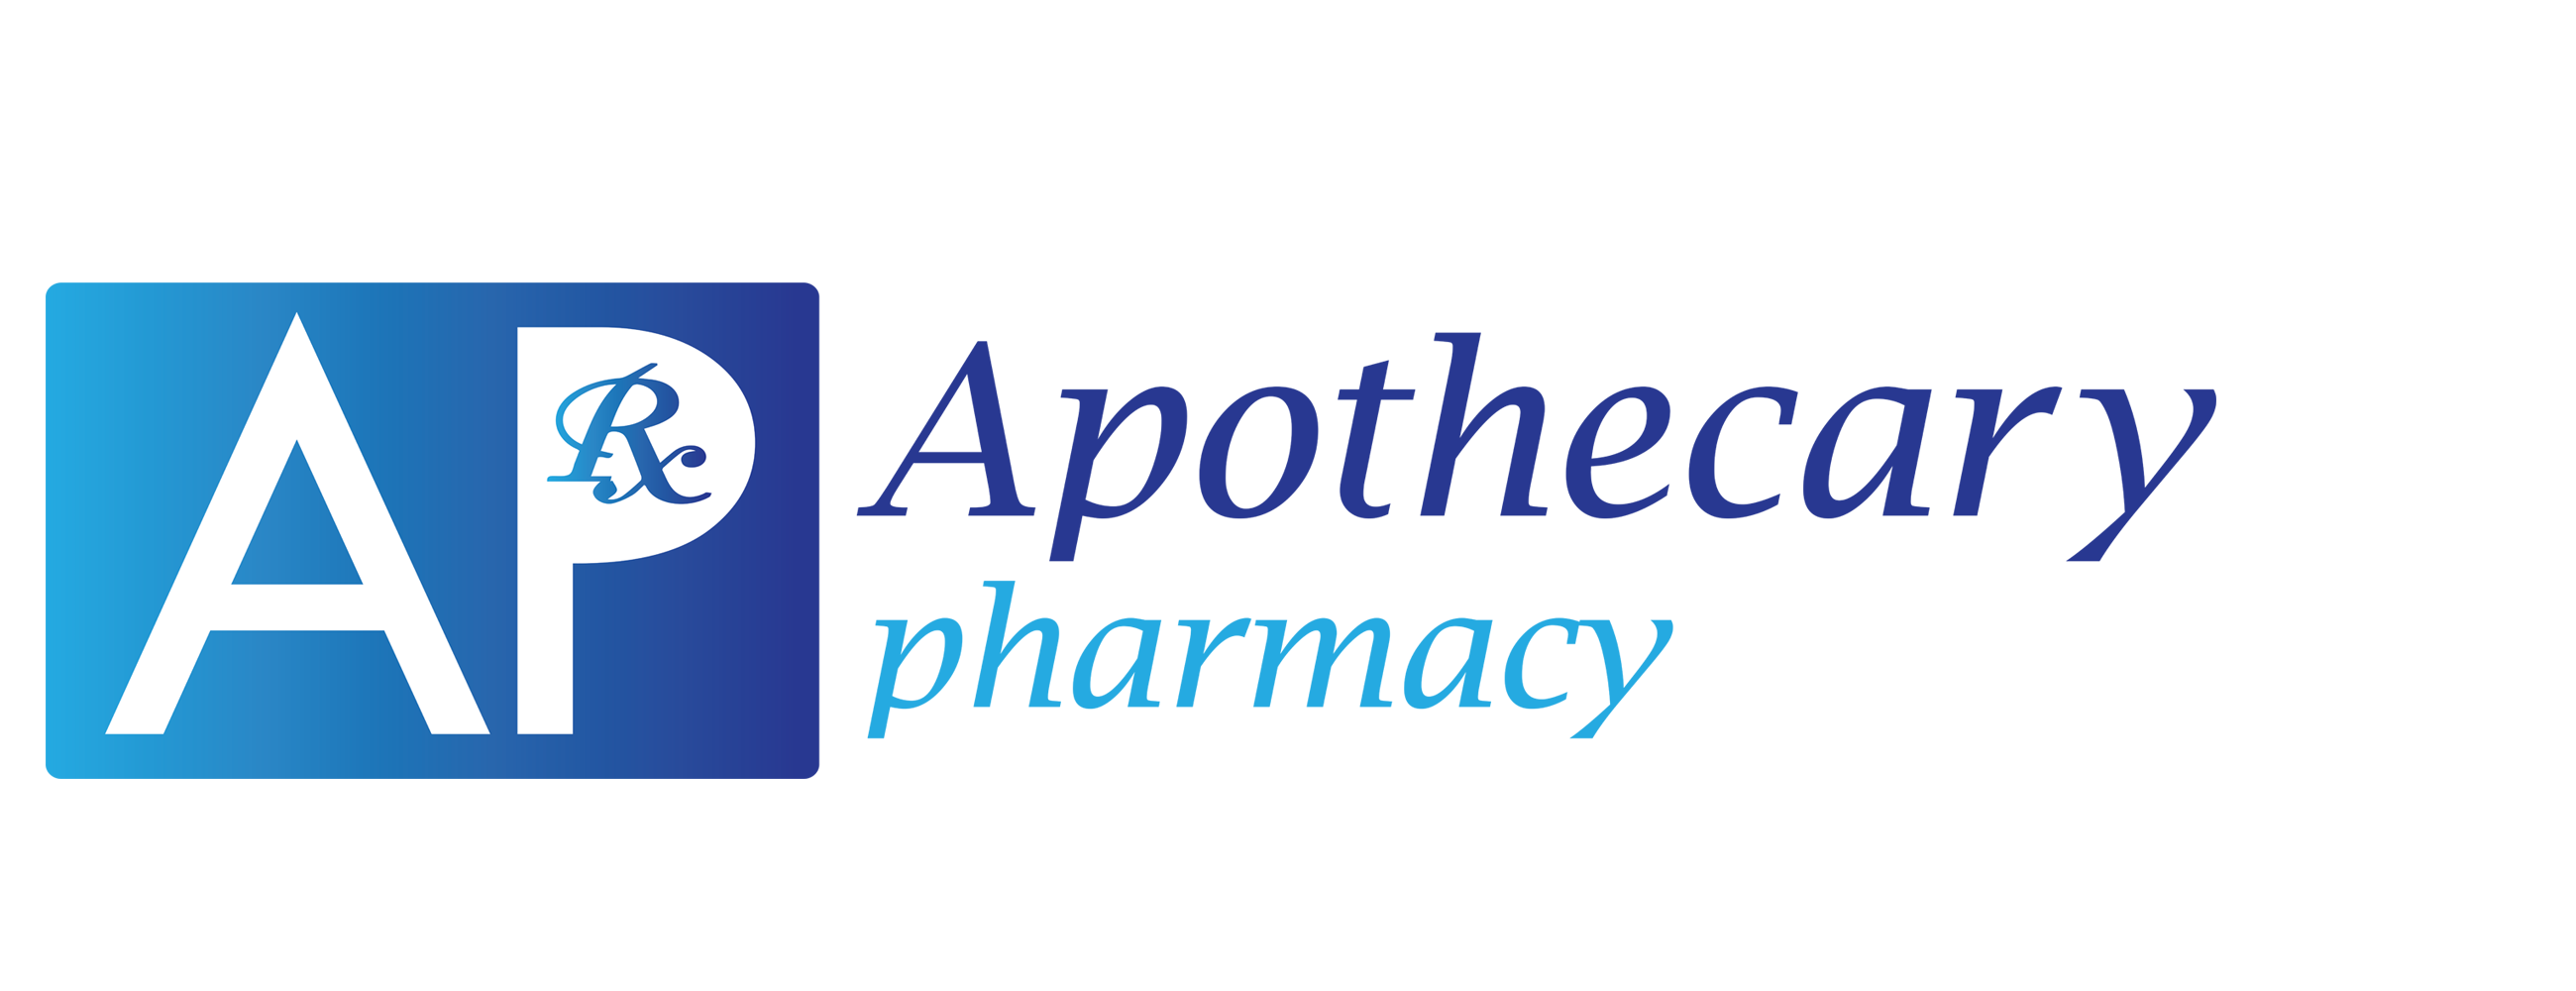 Apothecary Pharmacy